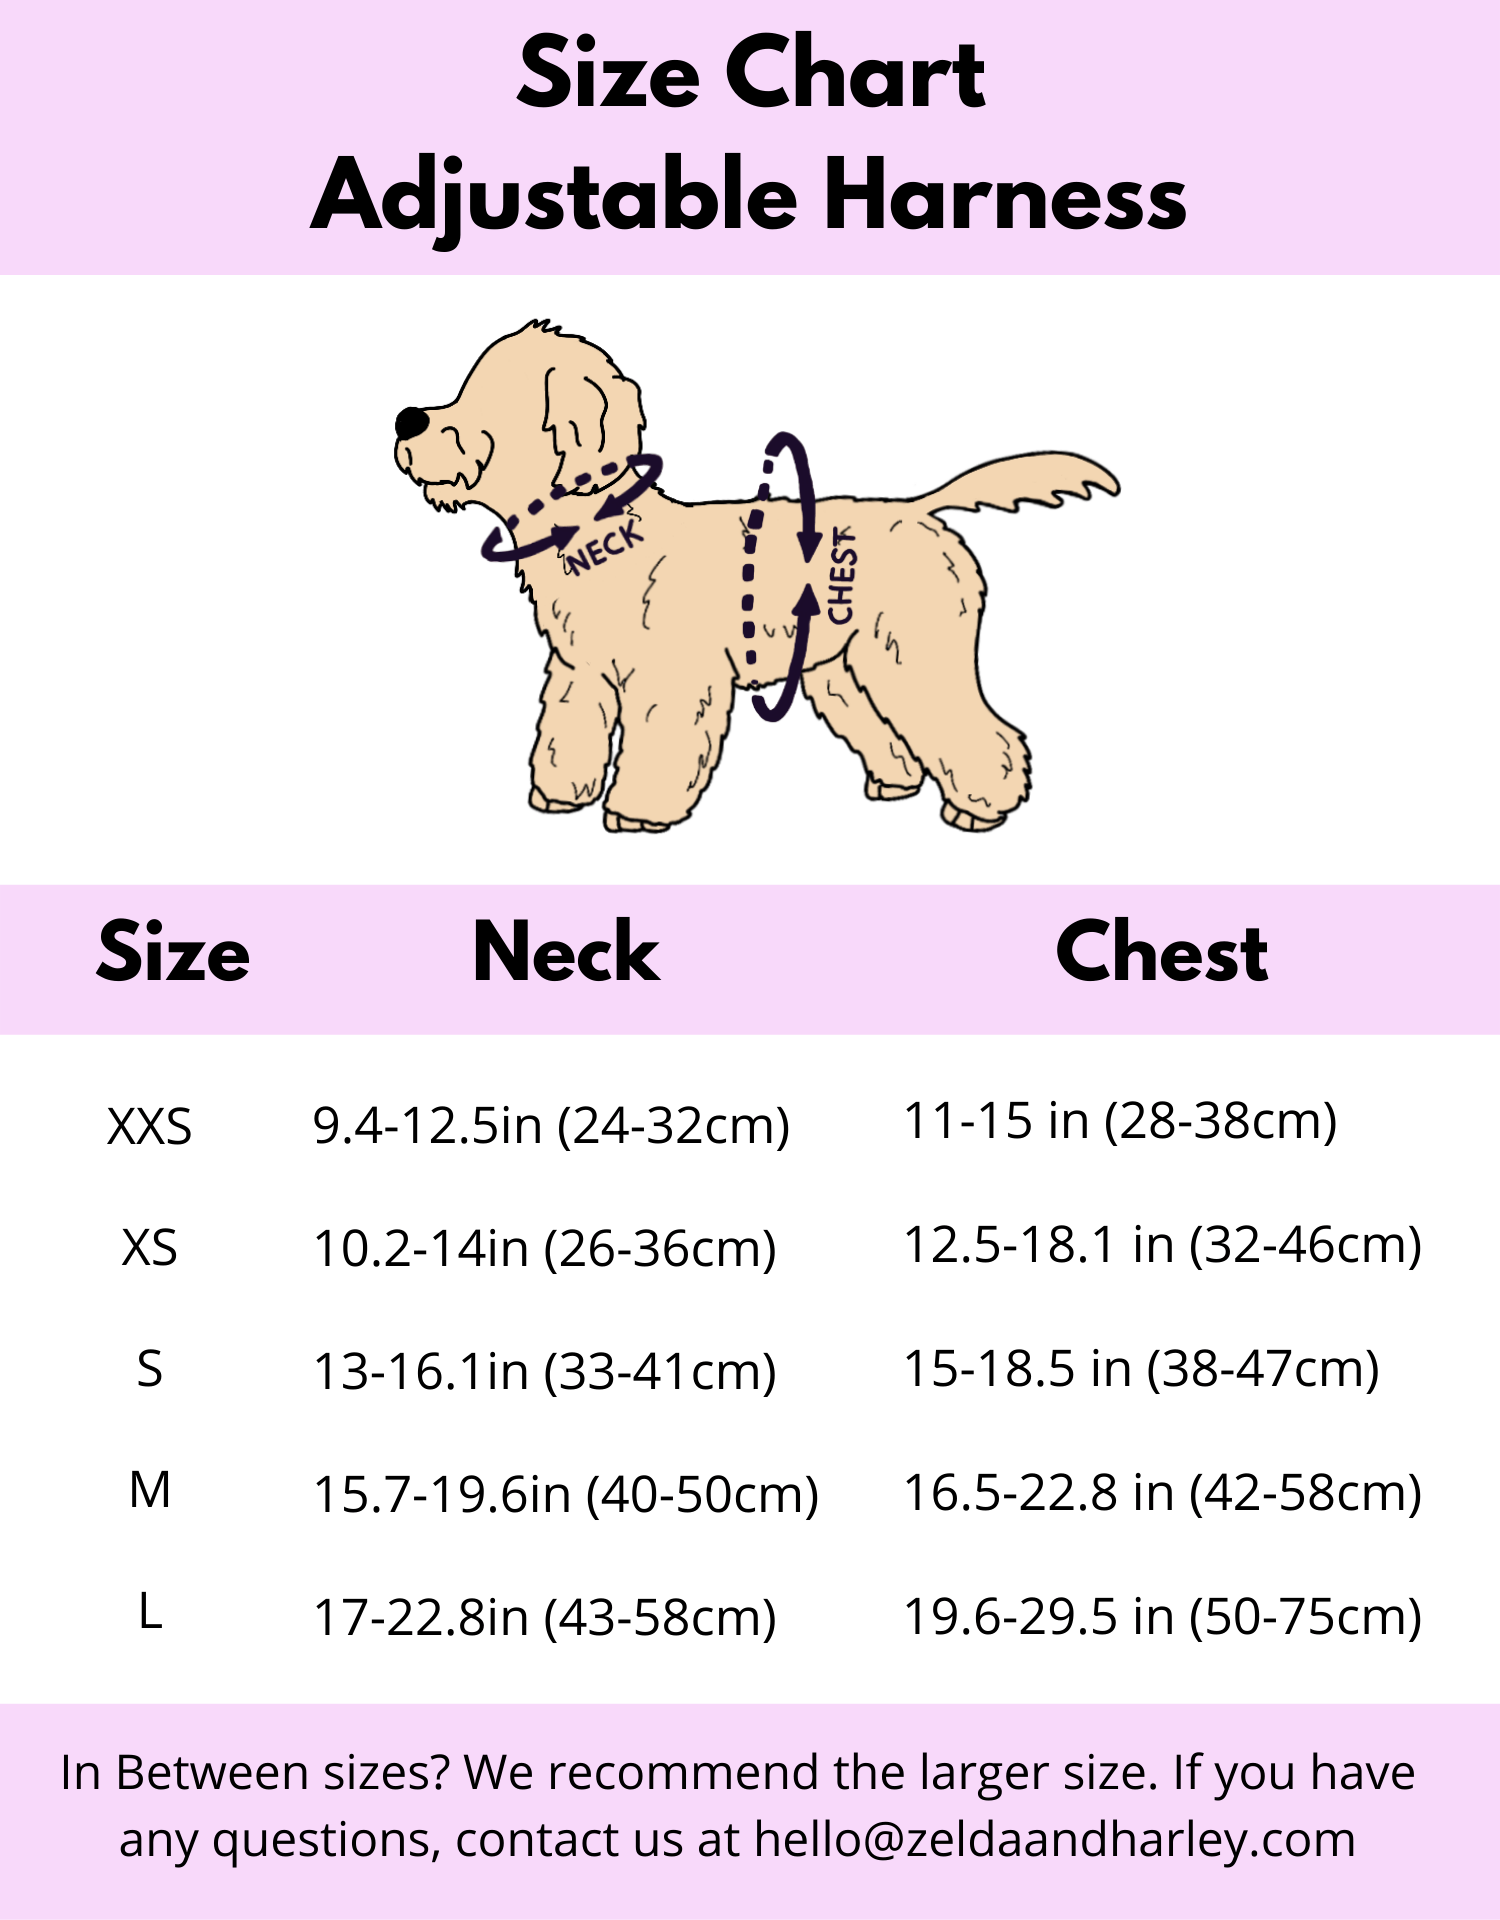 Zelda & Harley Harness Sole Mates - No Pull Adjustable Dog Harness